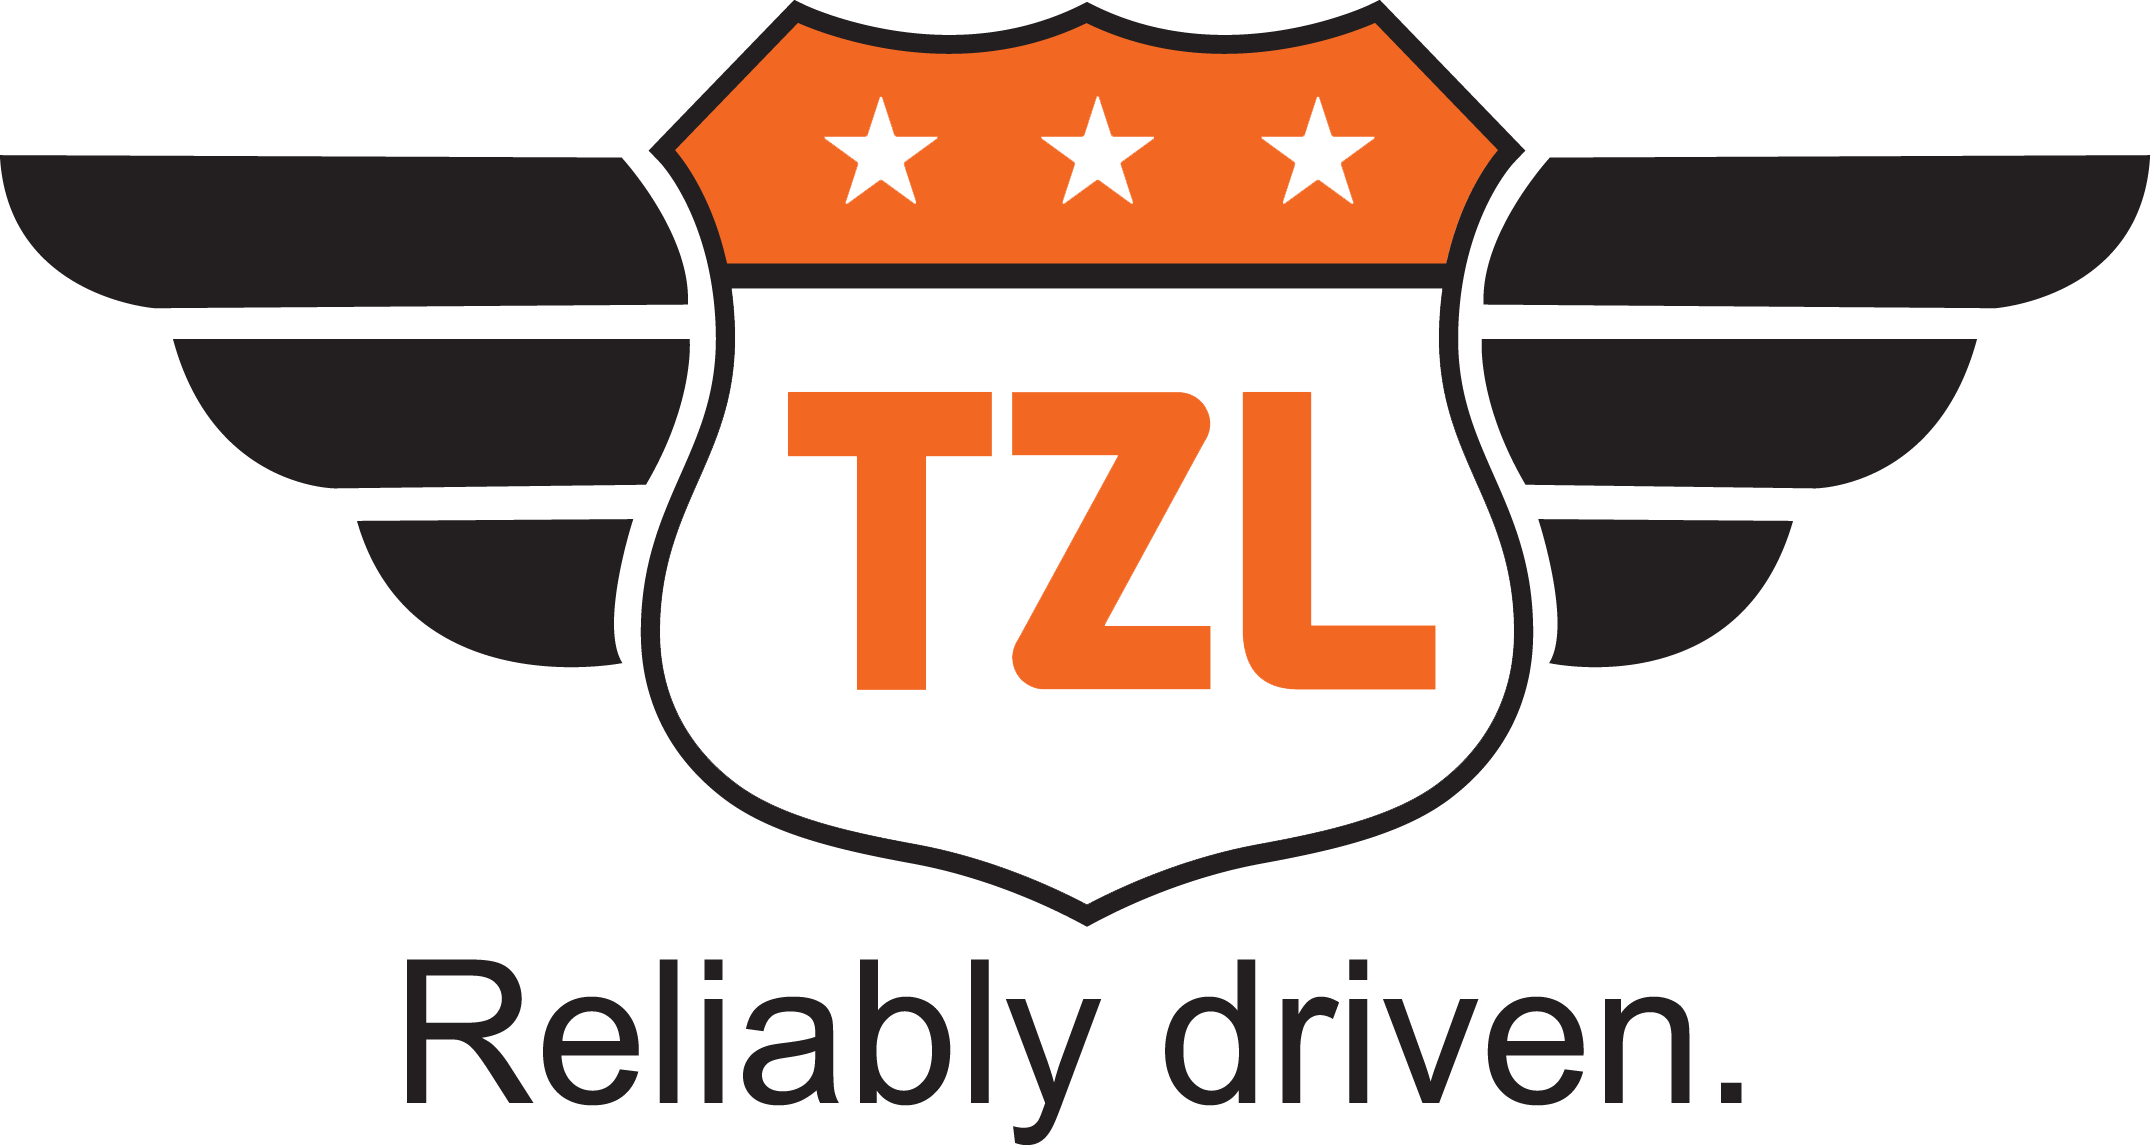 TZL LLC logo - Reliably driven.